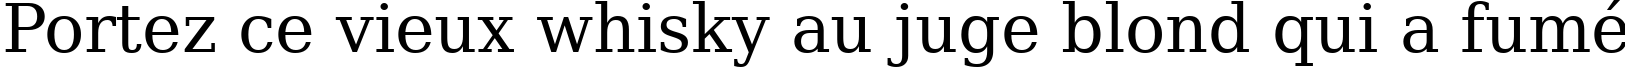 Пример написания шрифтом ae_Hor текста на французском